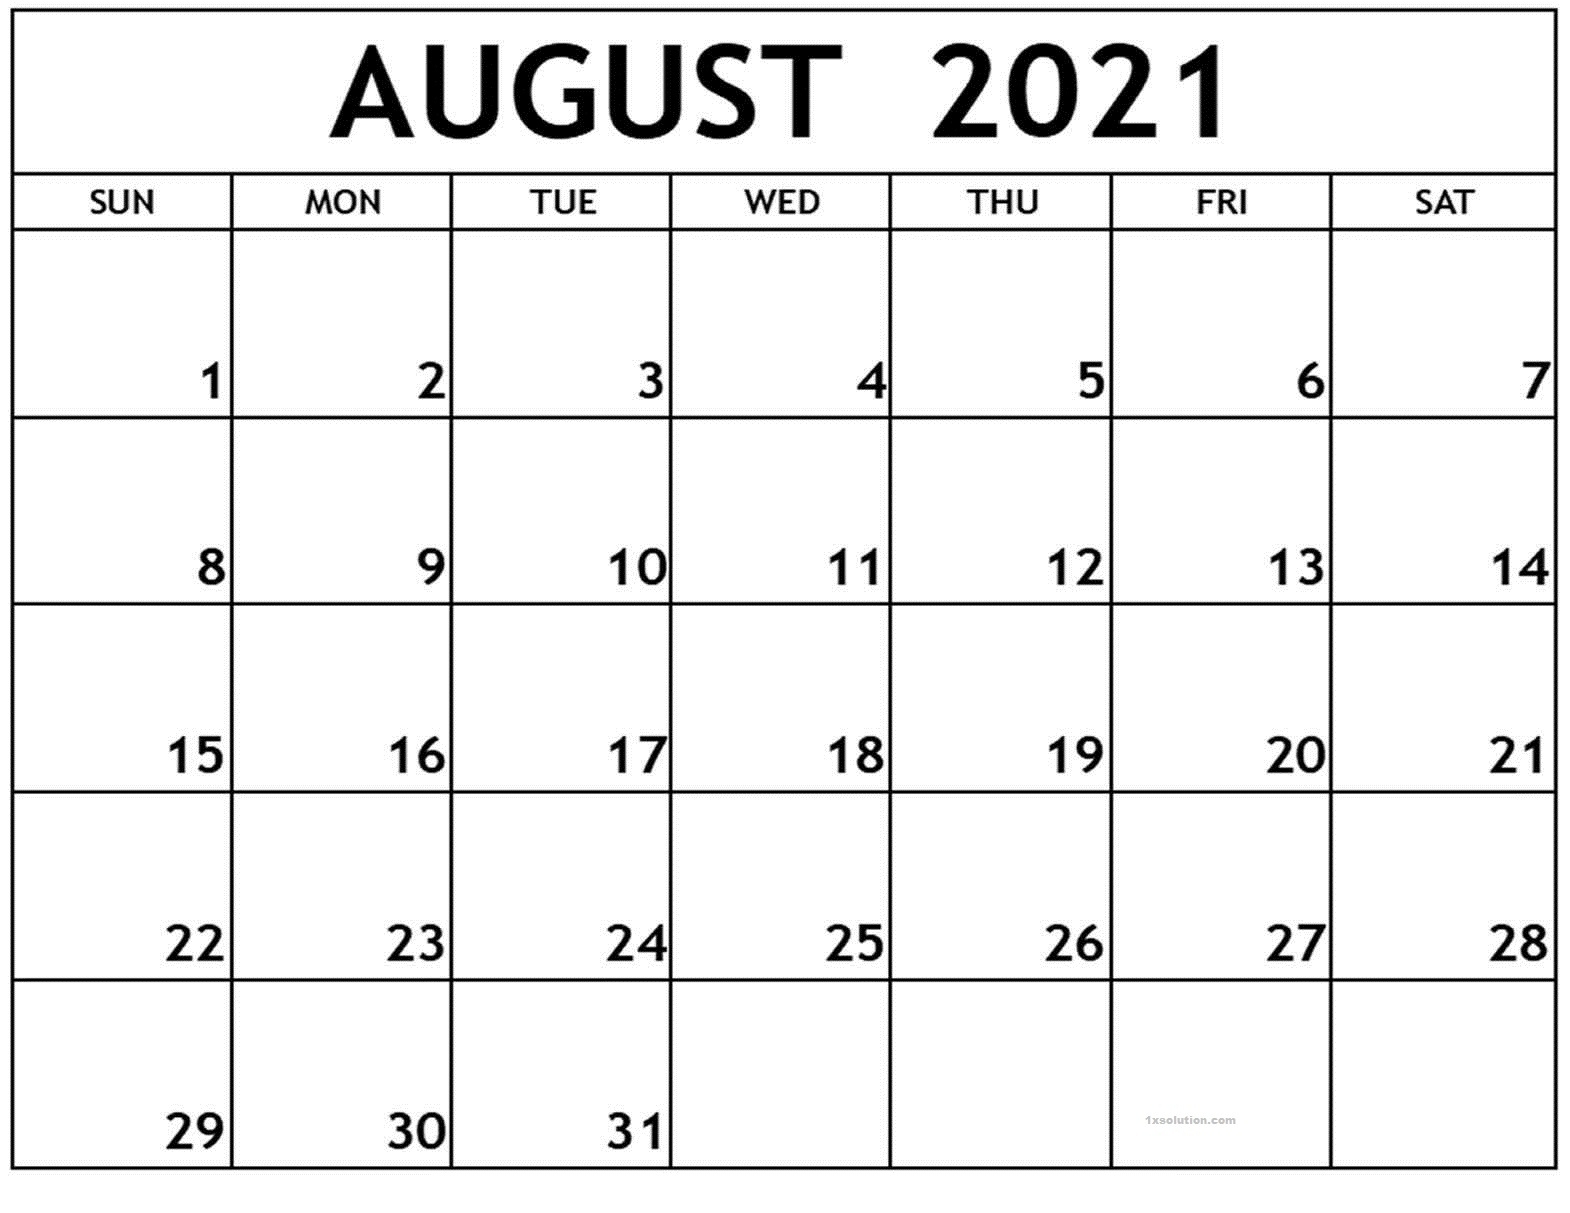 August 2021 Calendar Printable Schedule Excelsheet | Calendar August 2021 Calendar Xl